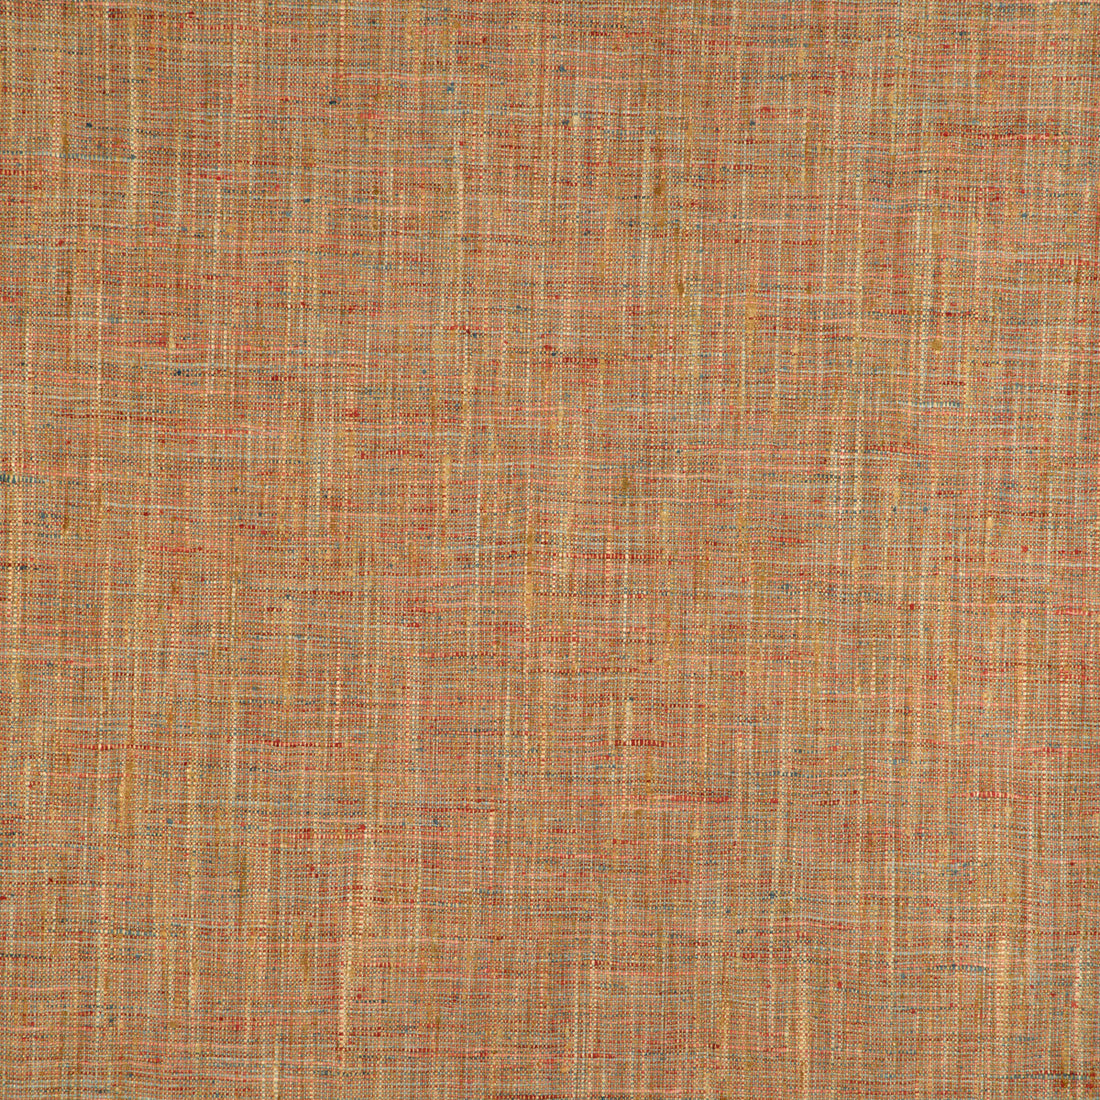 Kravet Smart fabric in 34983-615 color - pattern 34983.615.0 - by Kravet Smart